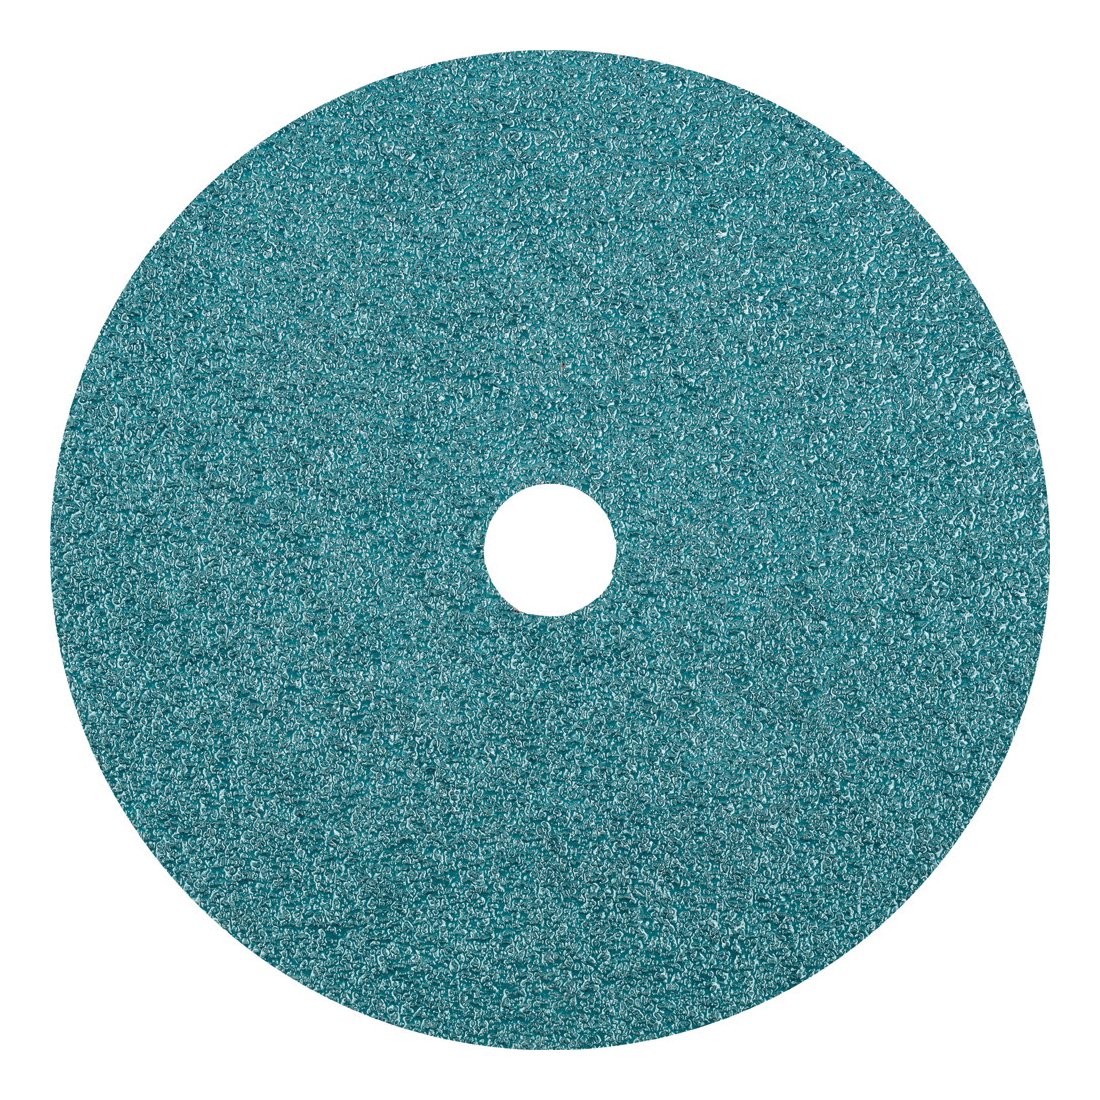 PFERD 62713 Standard Coated Abrasive Disc, 7 in Dia, 7/8 in Center Hole, 36 Grit, Zirconia Alumina Abrasive, Arbor Attachment